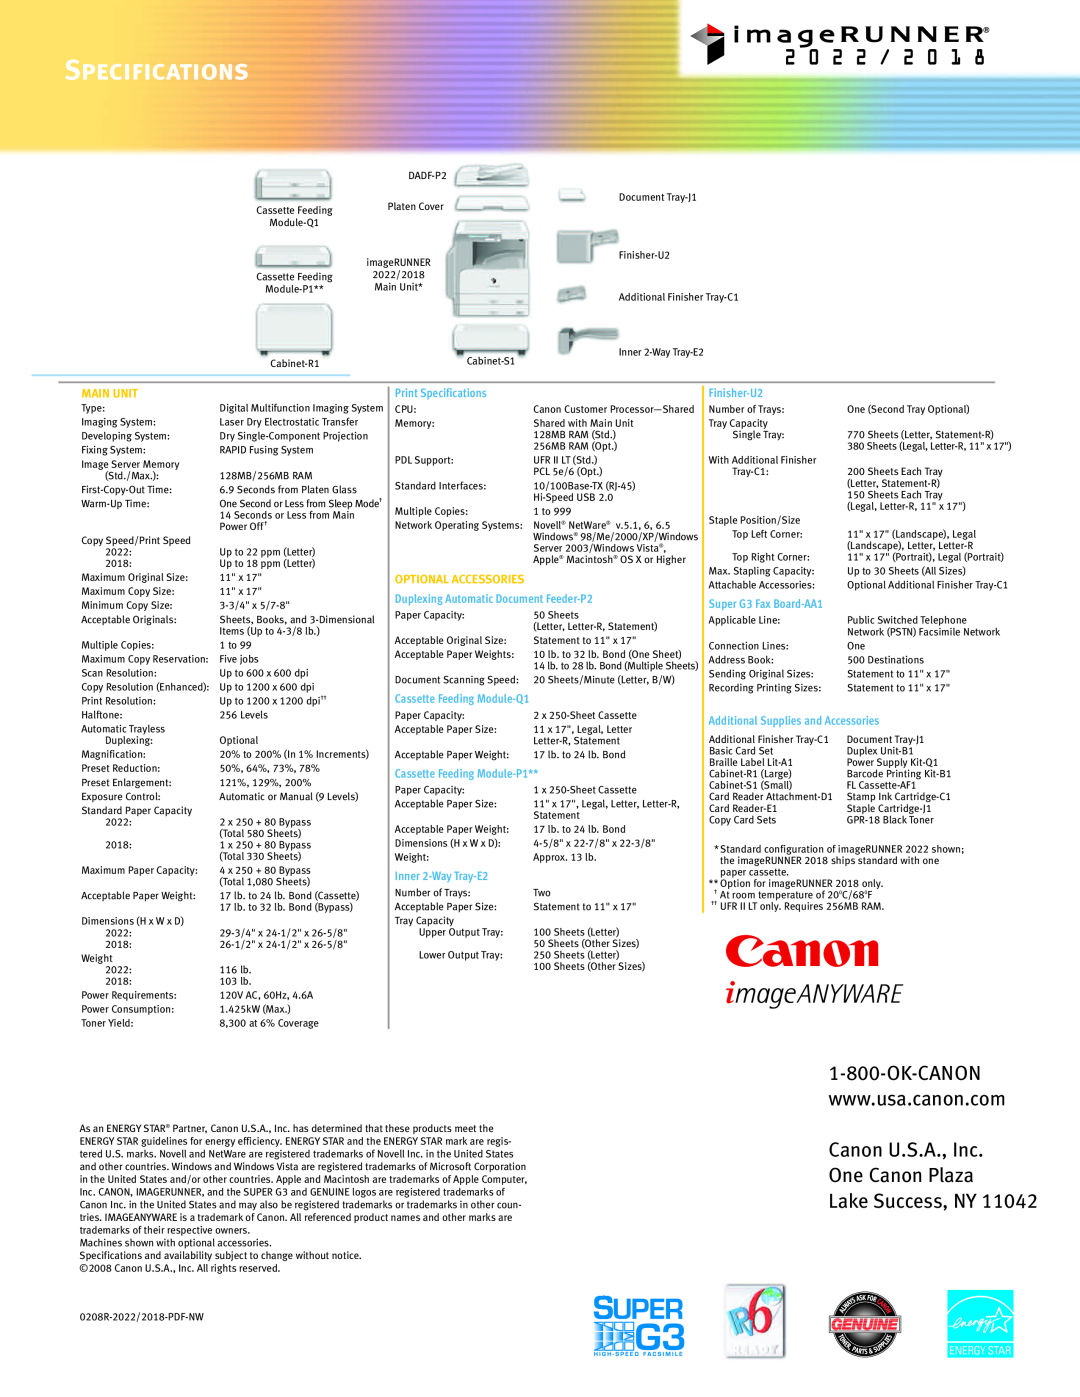 Canon 2022 Canon U.S.A., Inc One Canon Plaza Lake Success, NY, Main Unit, Print Specifications, Optional Accessories 